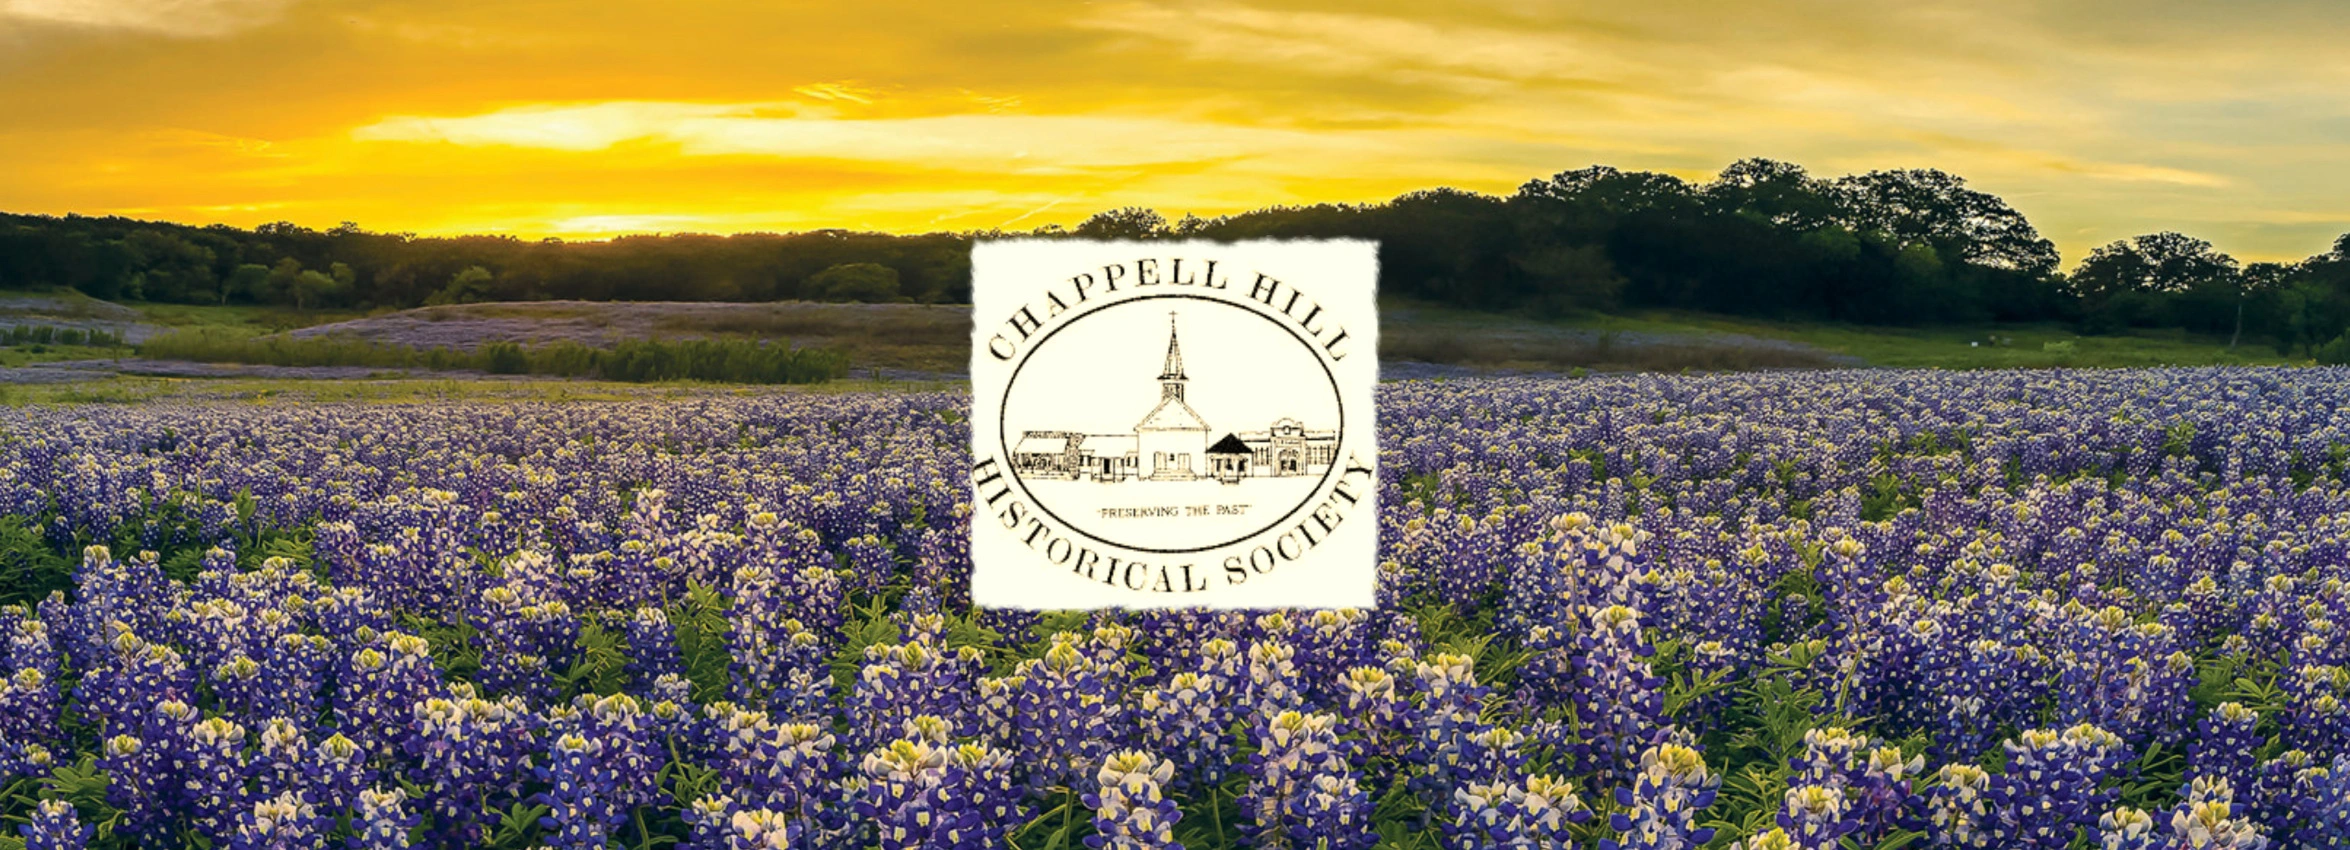 Chappell-Hill-Historical-Society_desktop_ET